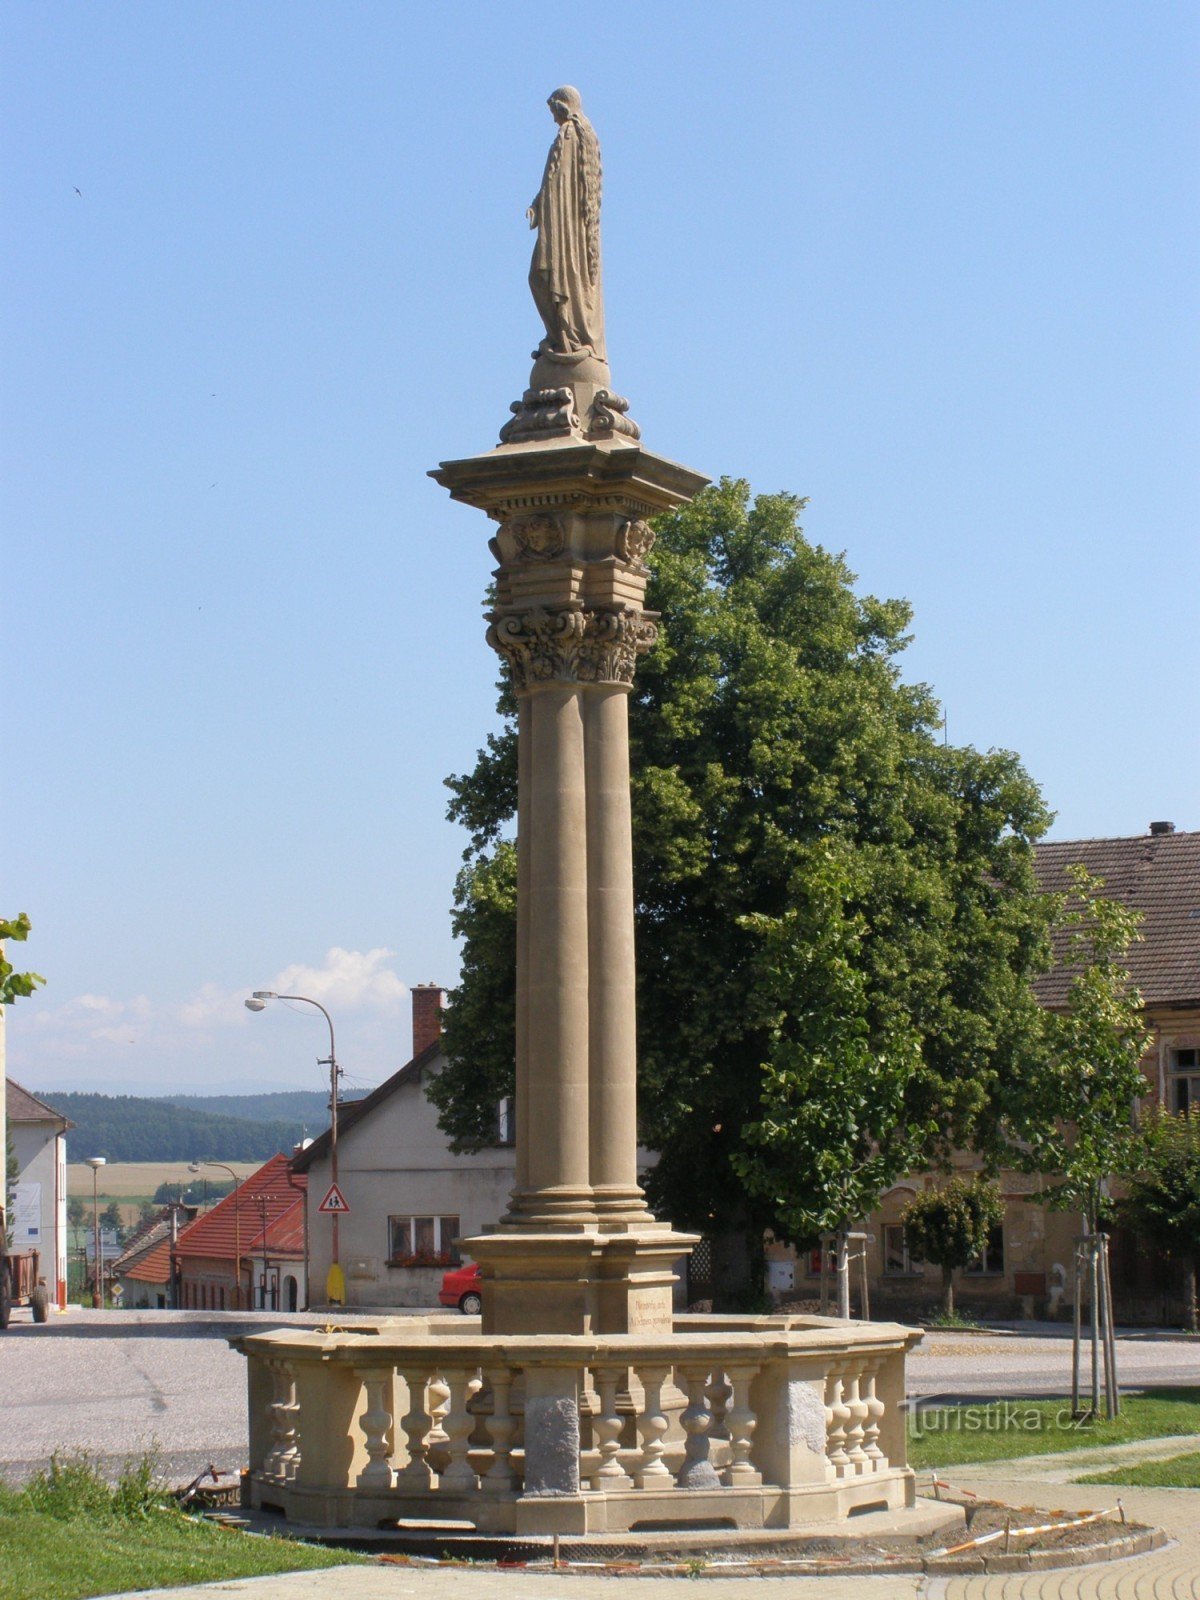 Mlázovice - plein, reeks monumenten